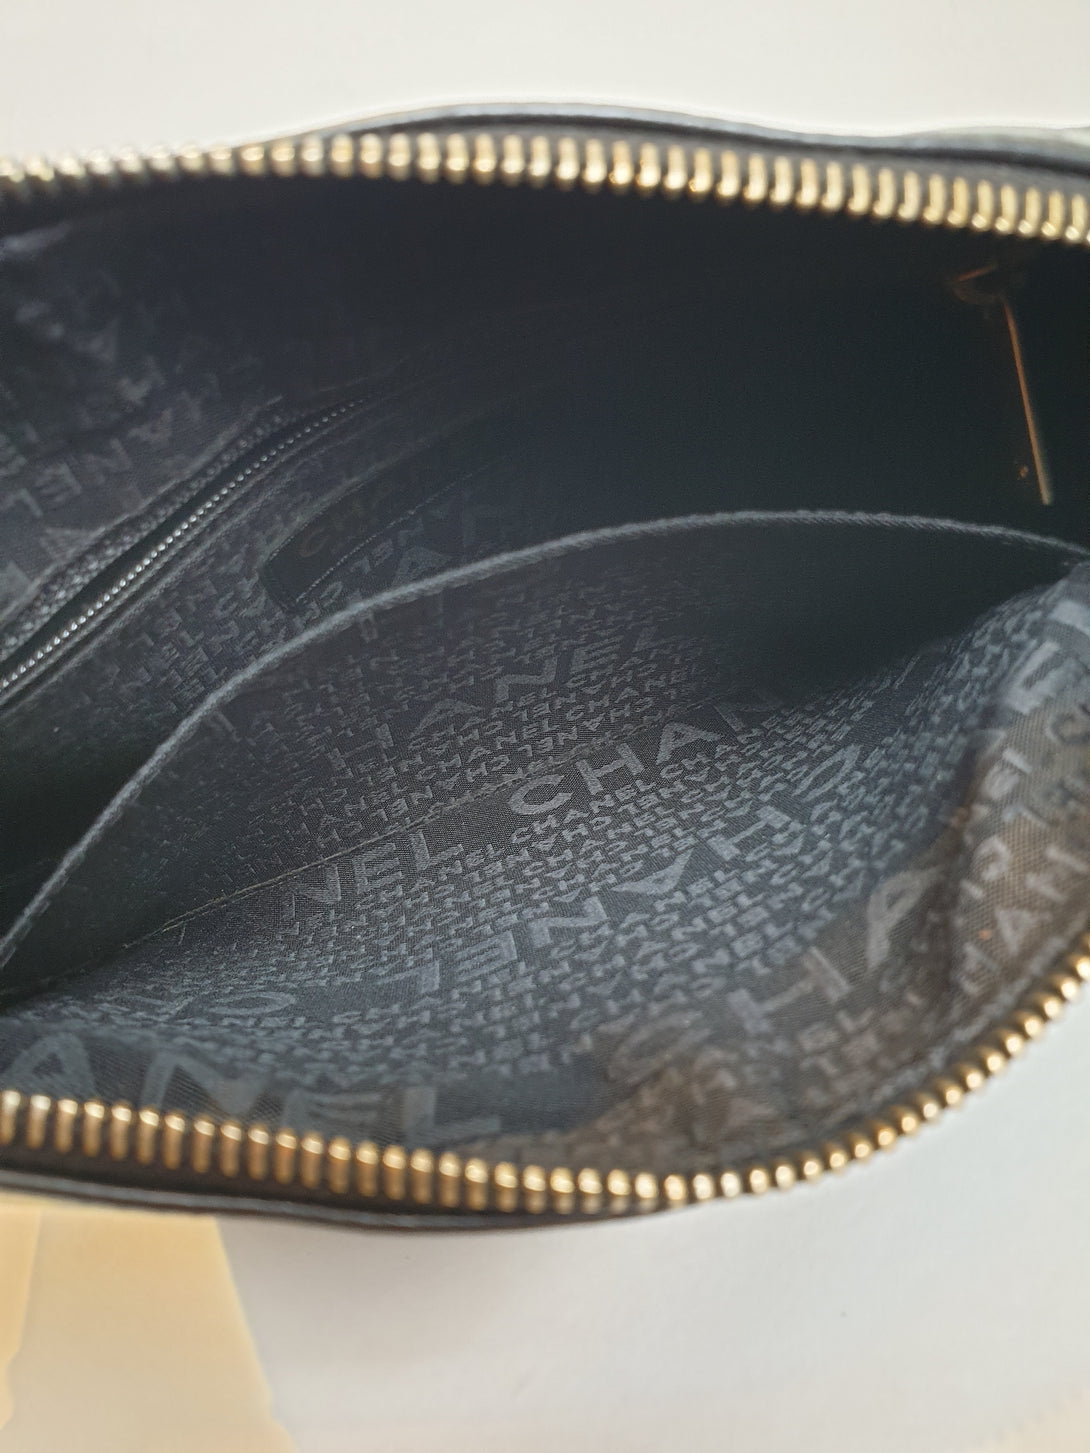 Chanel Black Leather Crossbody - As Seen on Instagram 2/08/2020 - Siopaella Designer Exchange